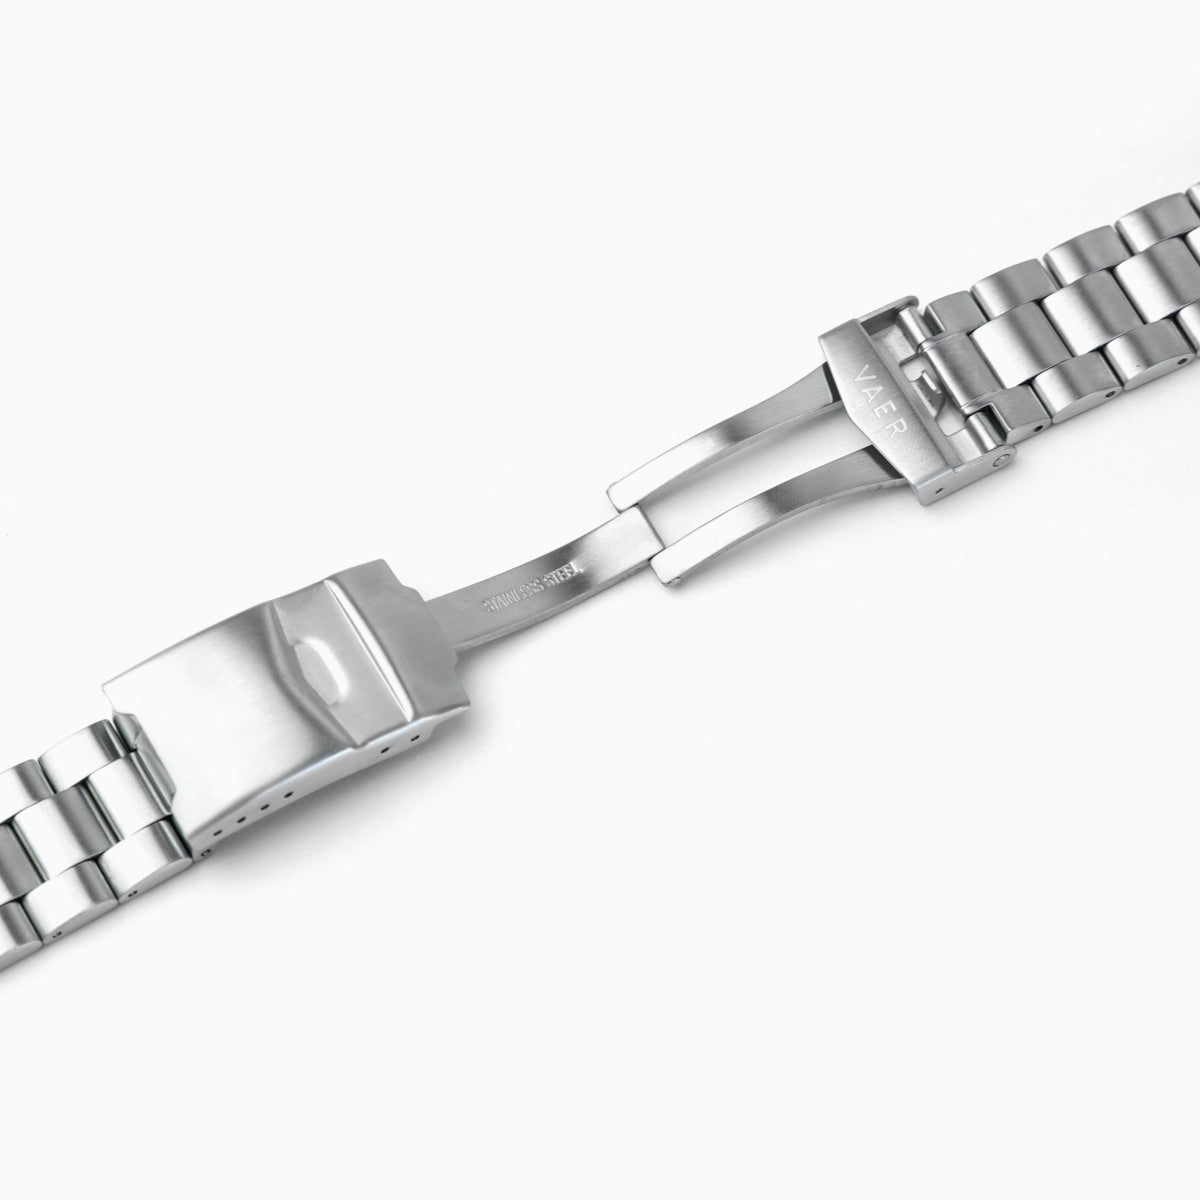 Standard Quick Release 3-Link Bracelet - Straight Endlink (Fits All Vaer Watches)